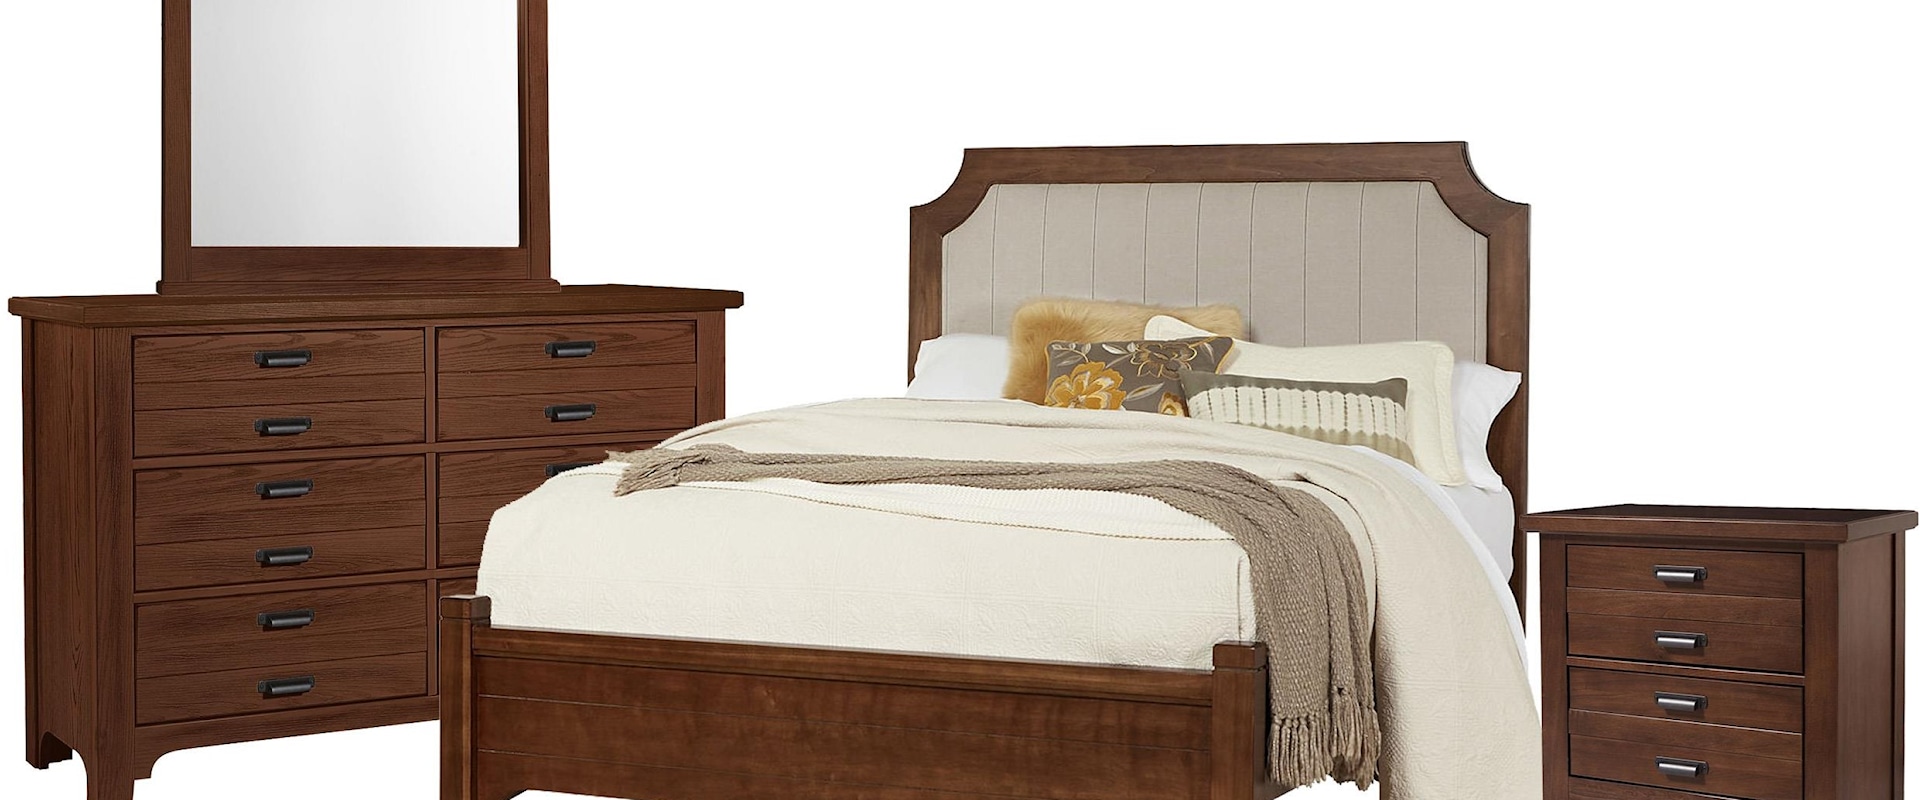 Queen Upholstered Bed, Double Dresser, Landscape Mirror, 2 Drawer Nightstand